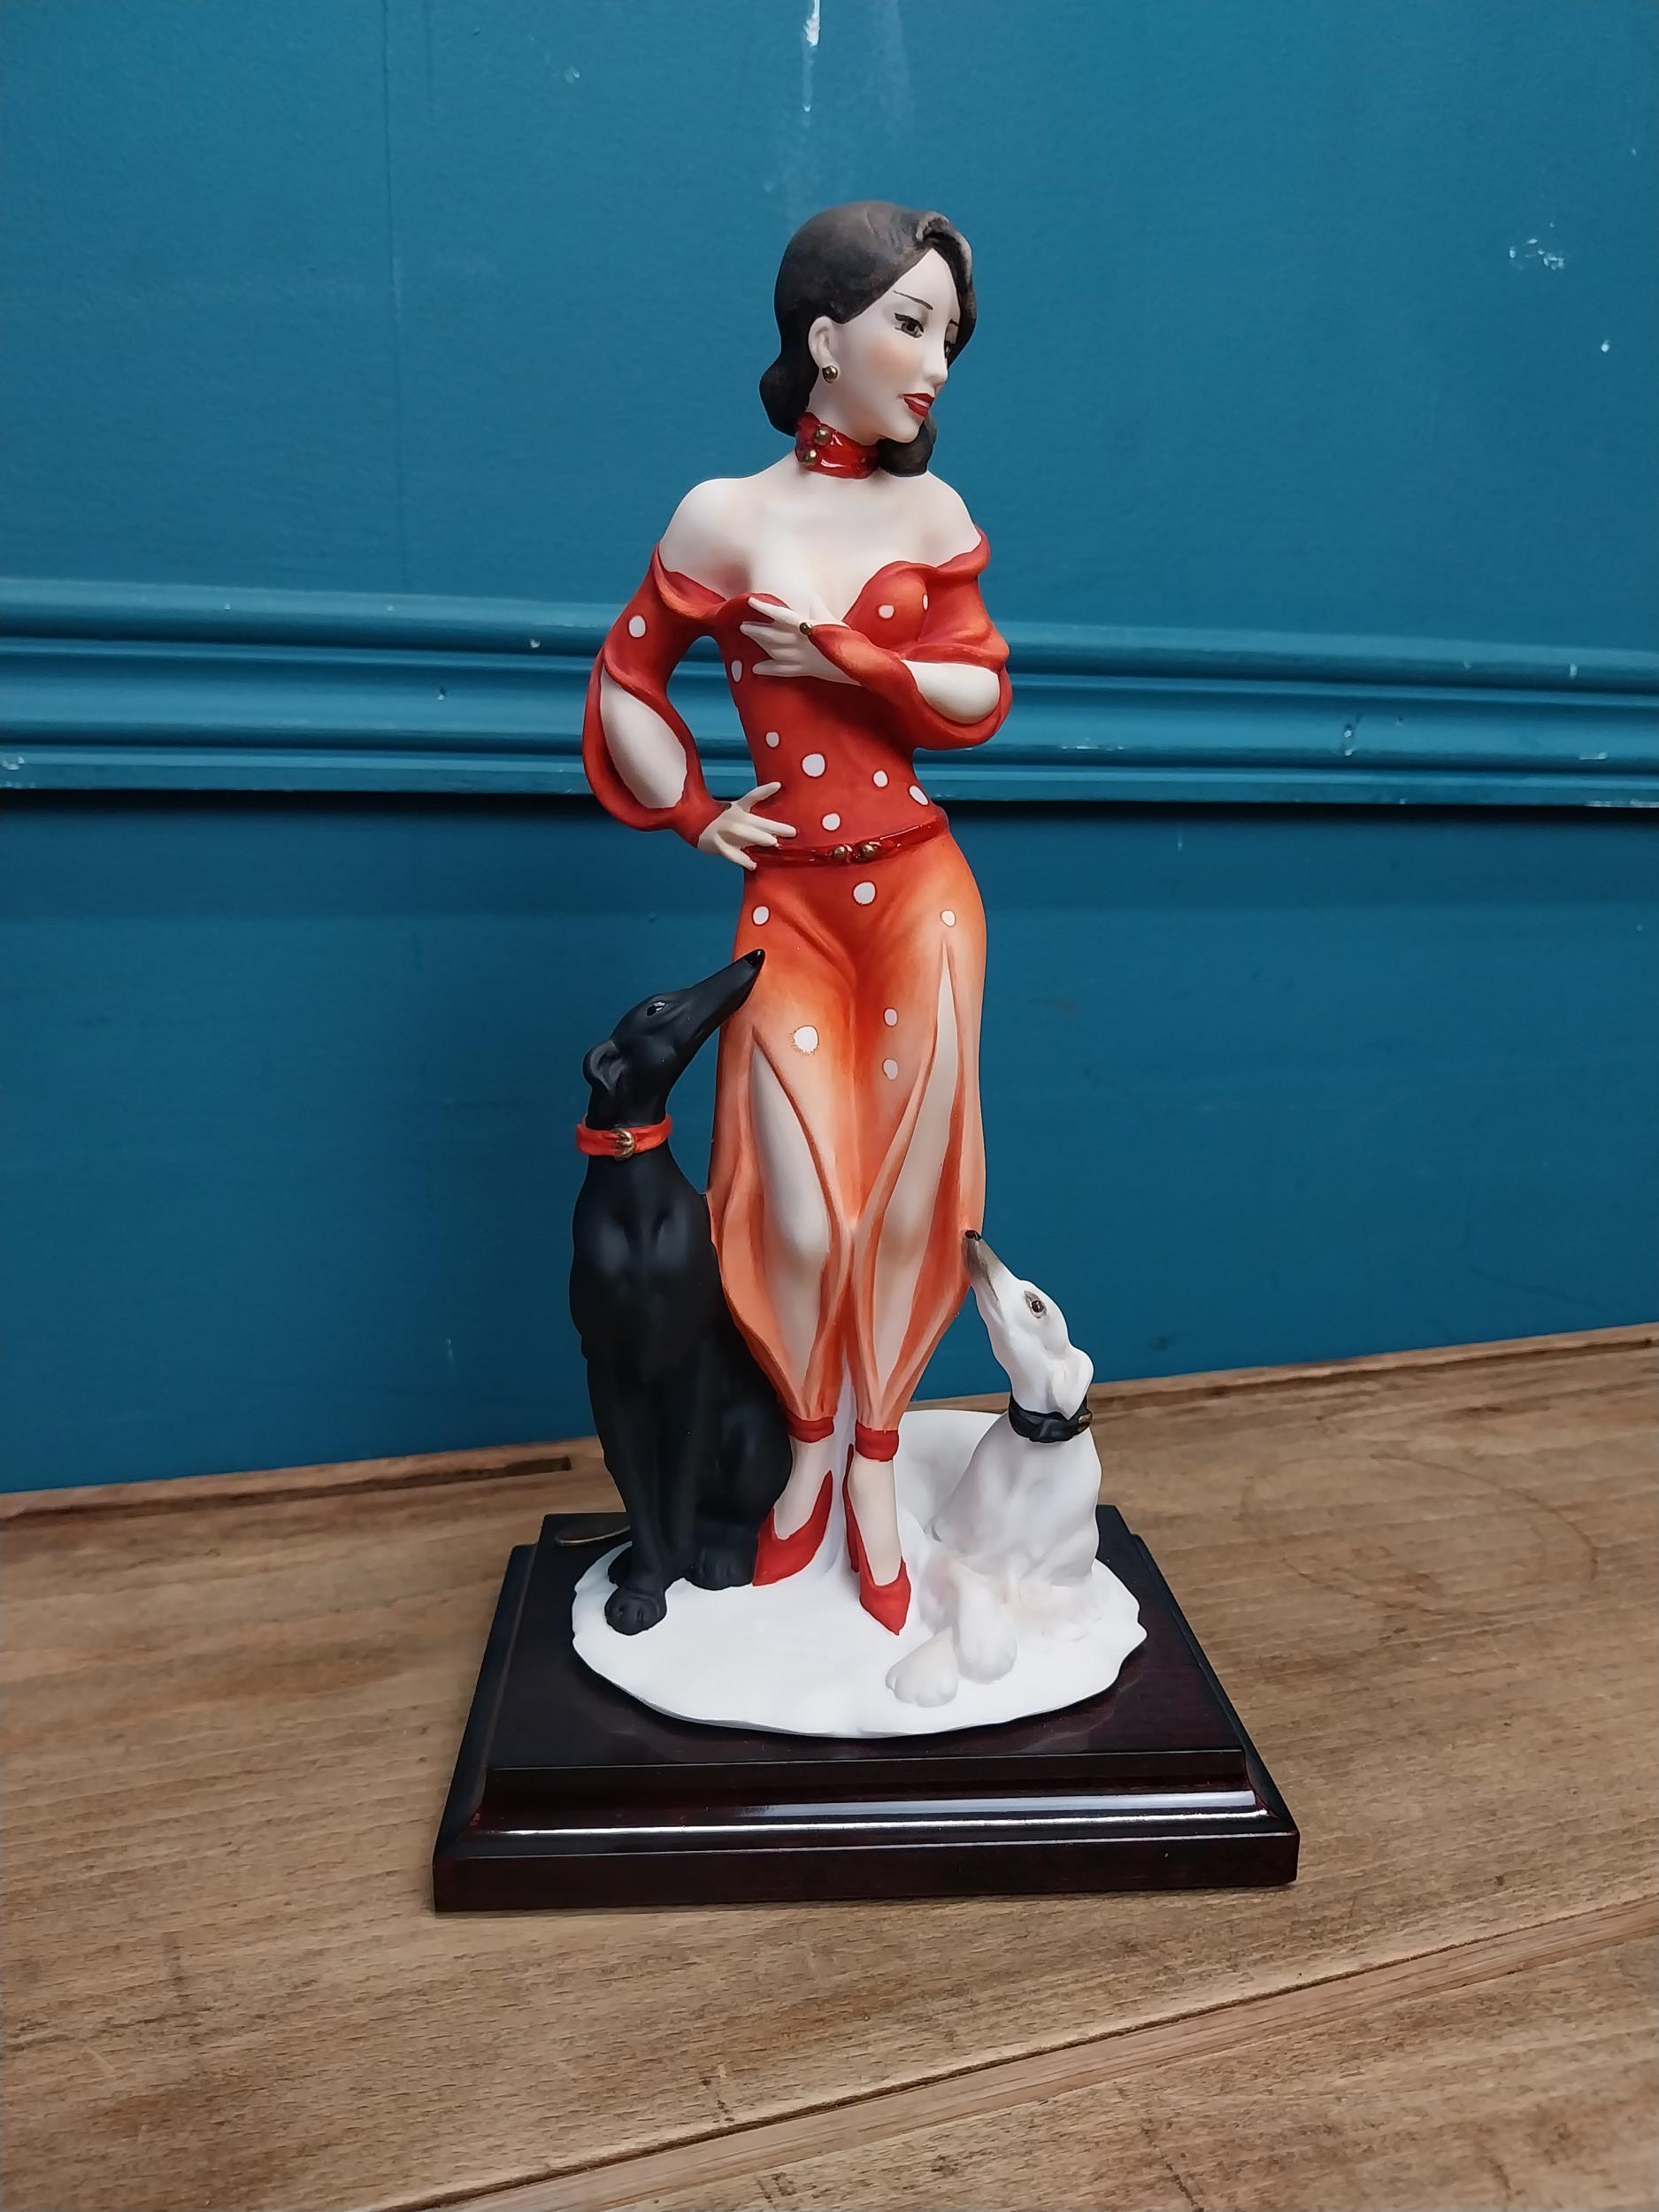 Italian ceramic model of Tatiana Lady with Dogs by Giuseppe Armani- Florence 2008 Figurine of the